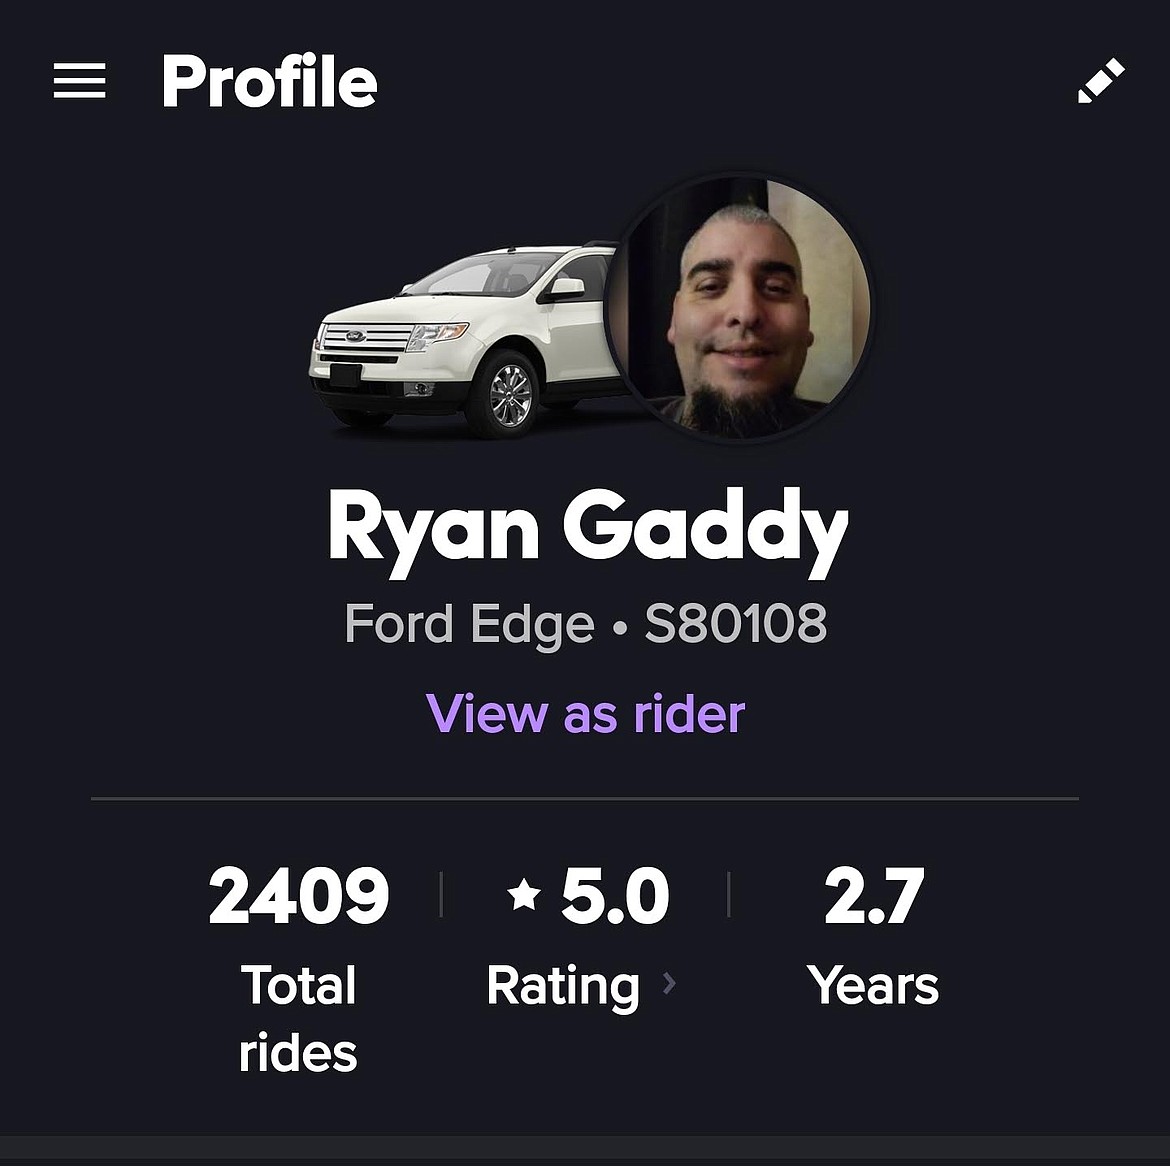 Ryan Gaddy's Lyft profile shown on the app.